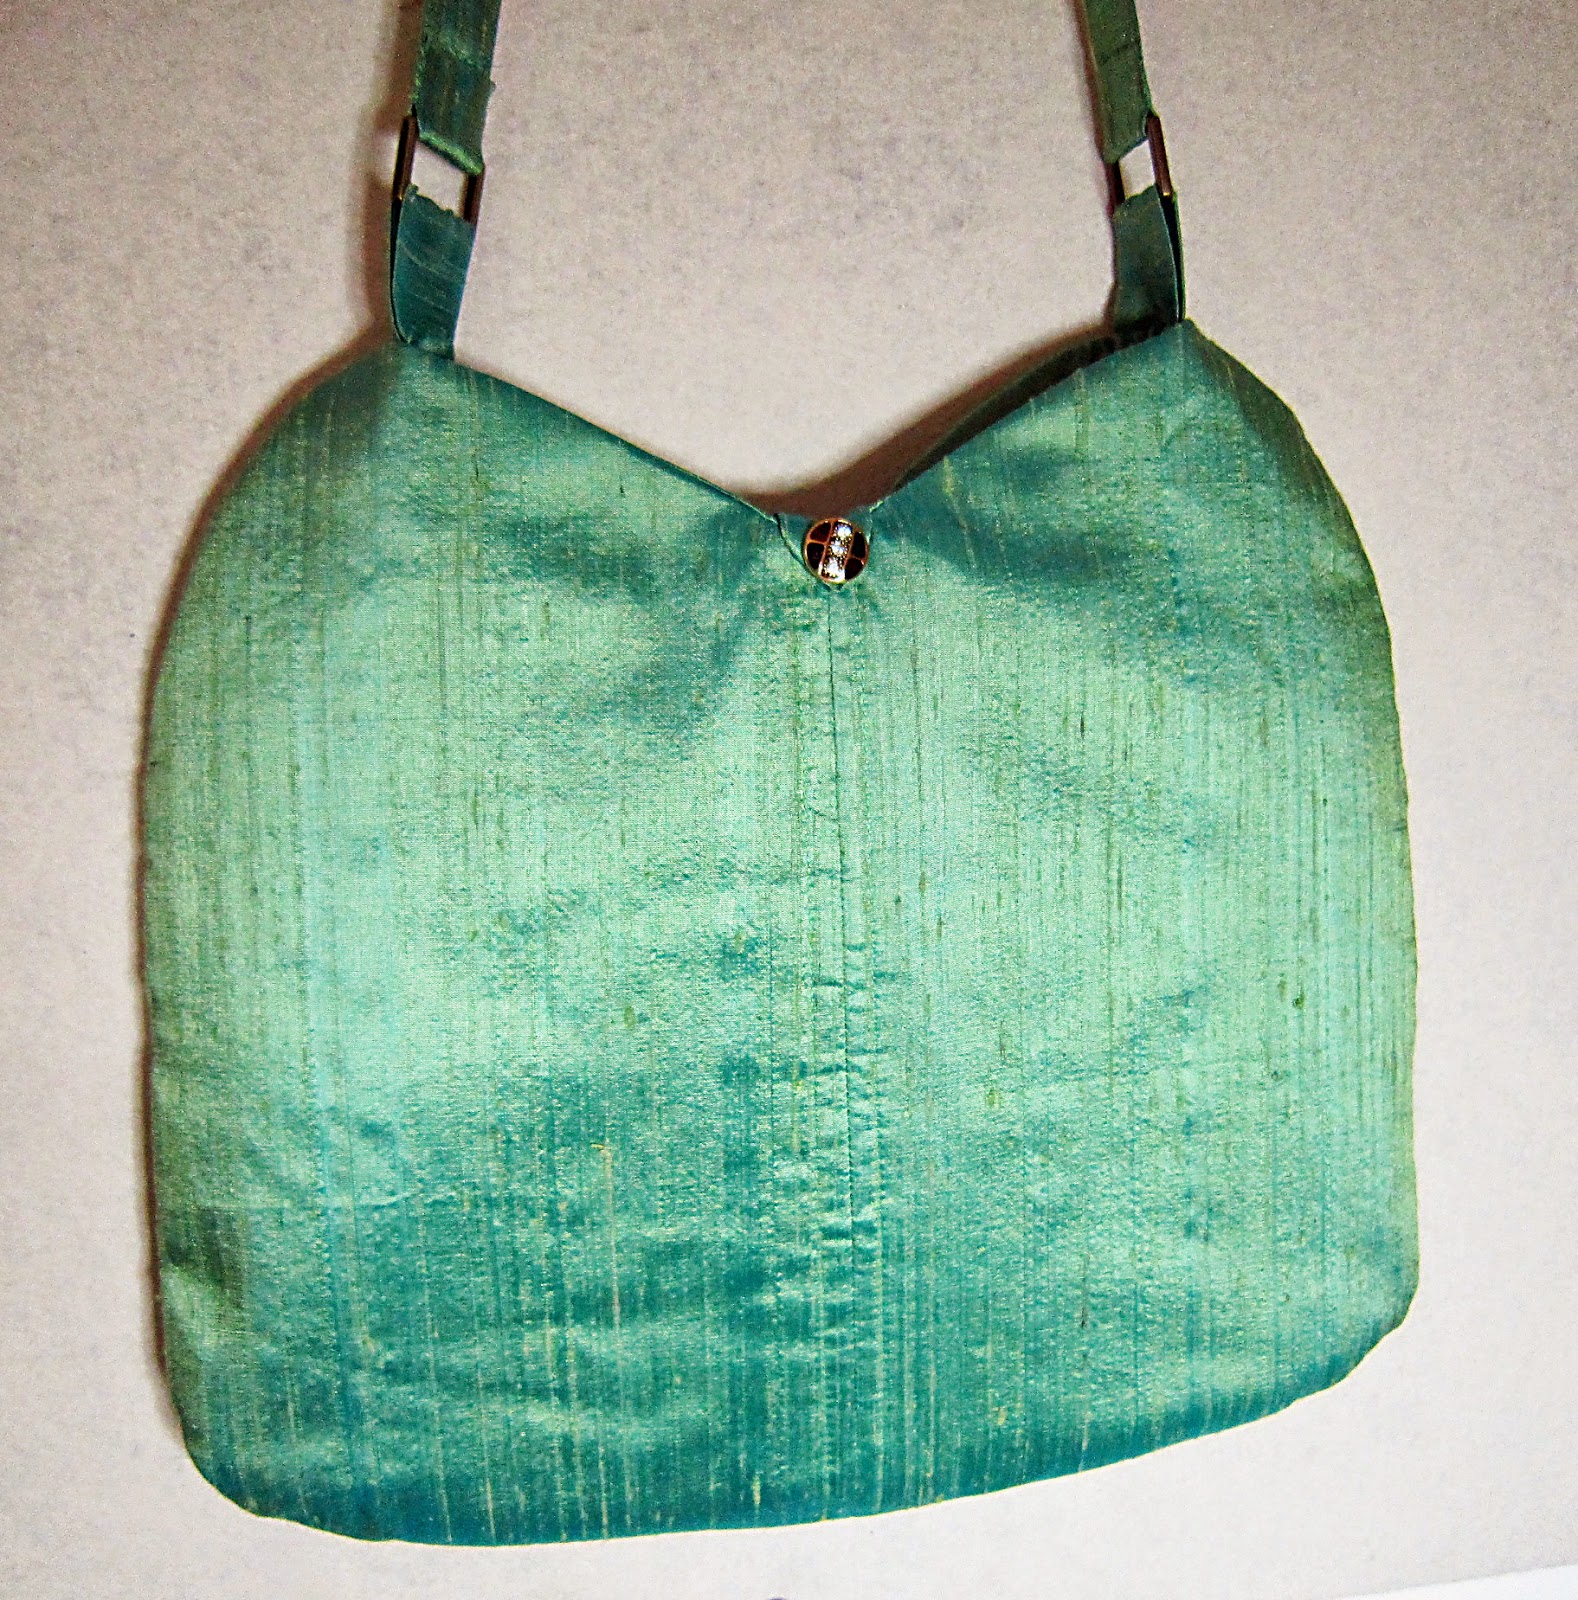 Quilting Artfully: Making Silk Bags